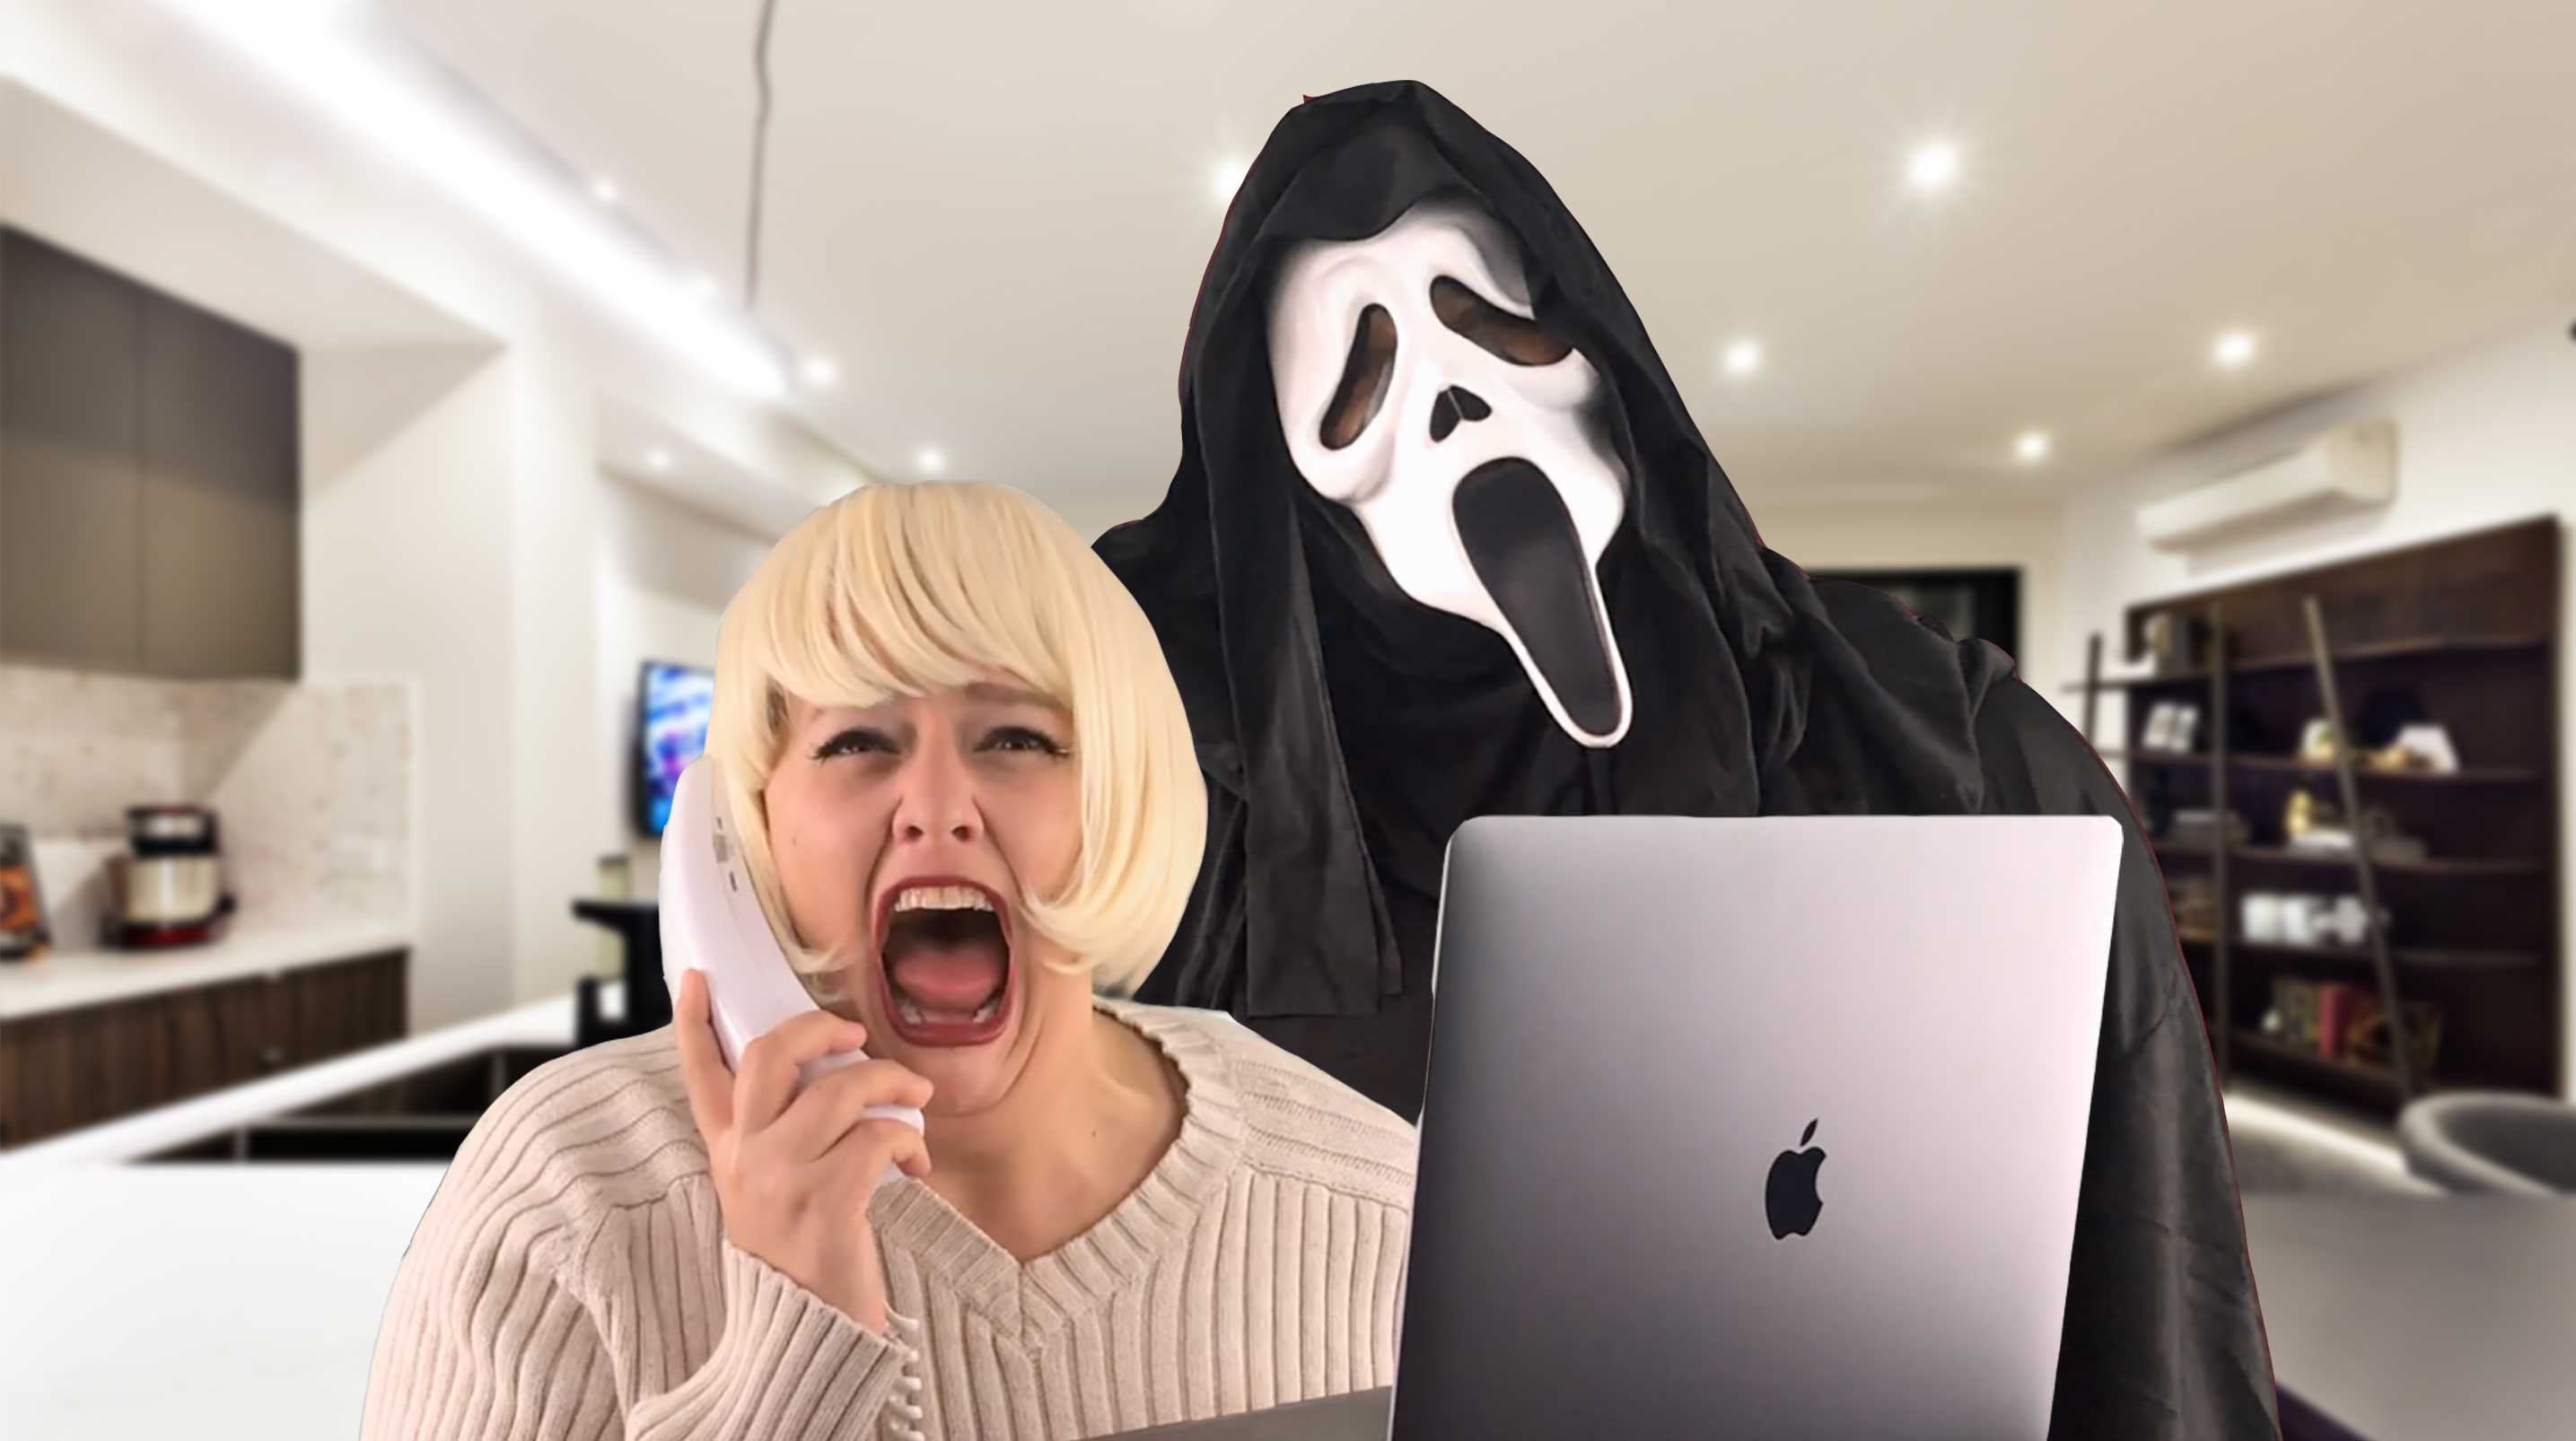 If Ghostface was an online marketer